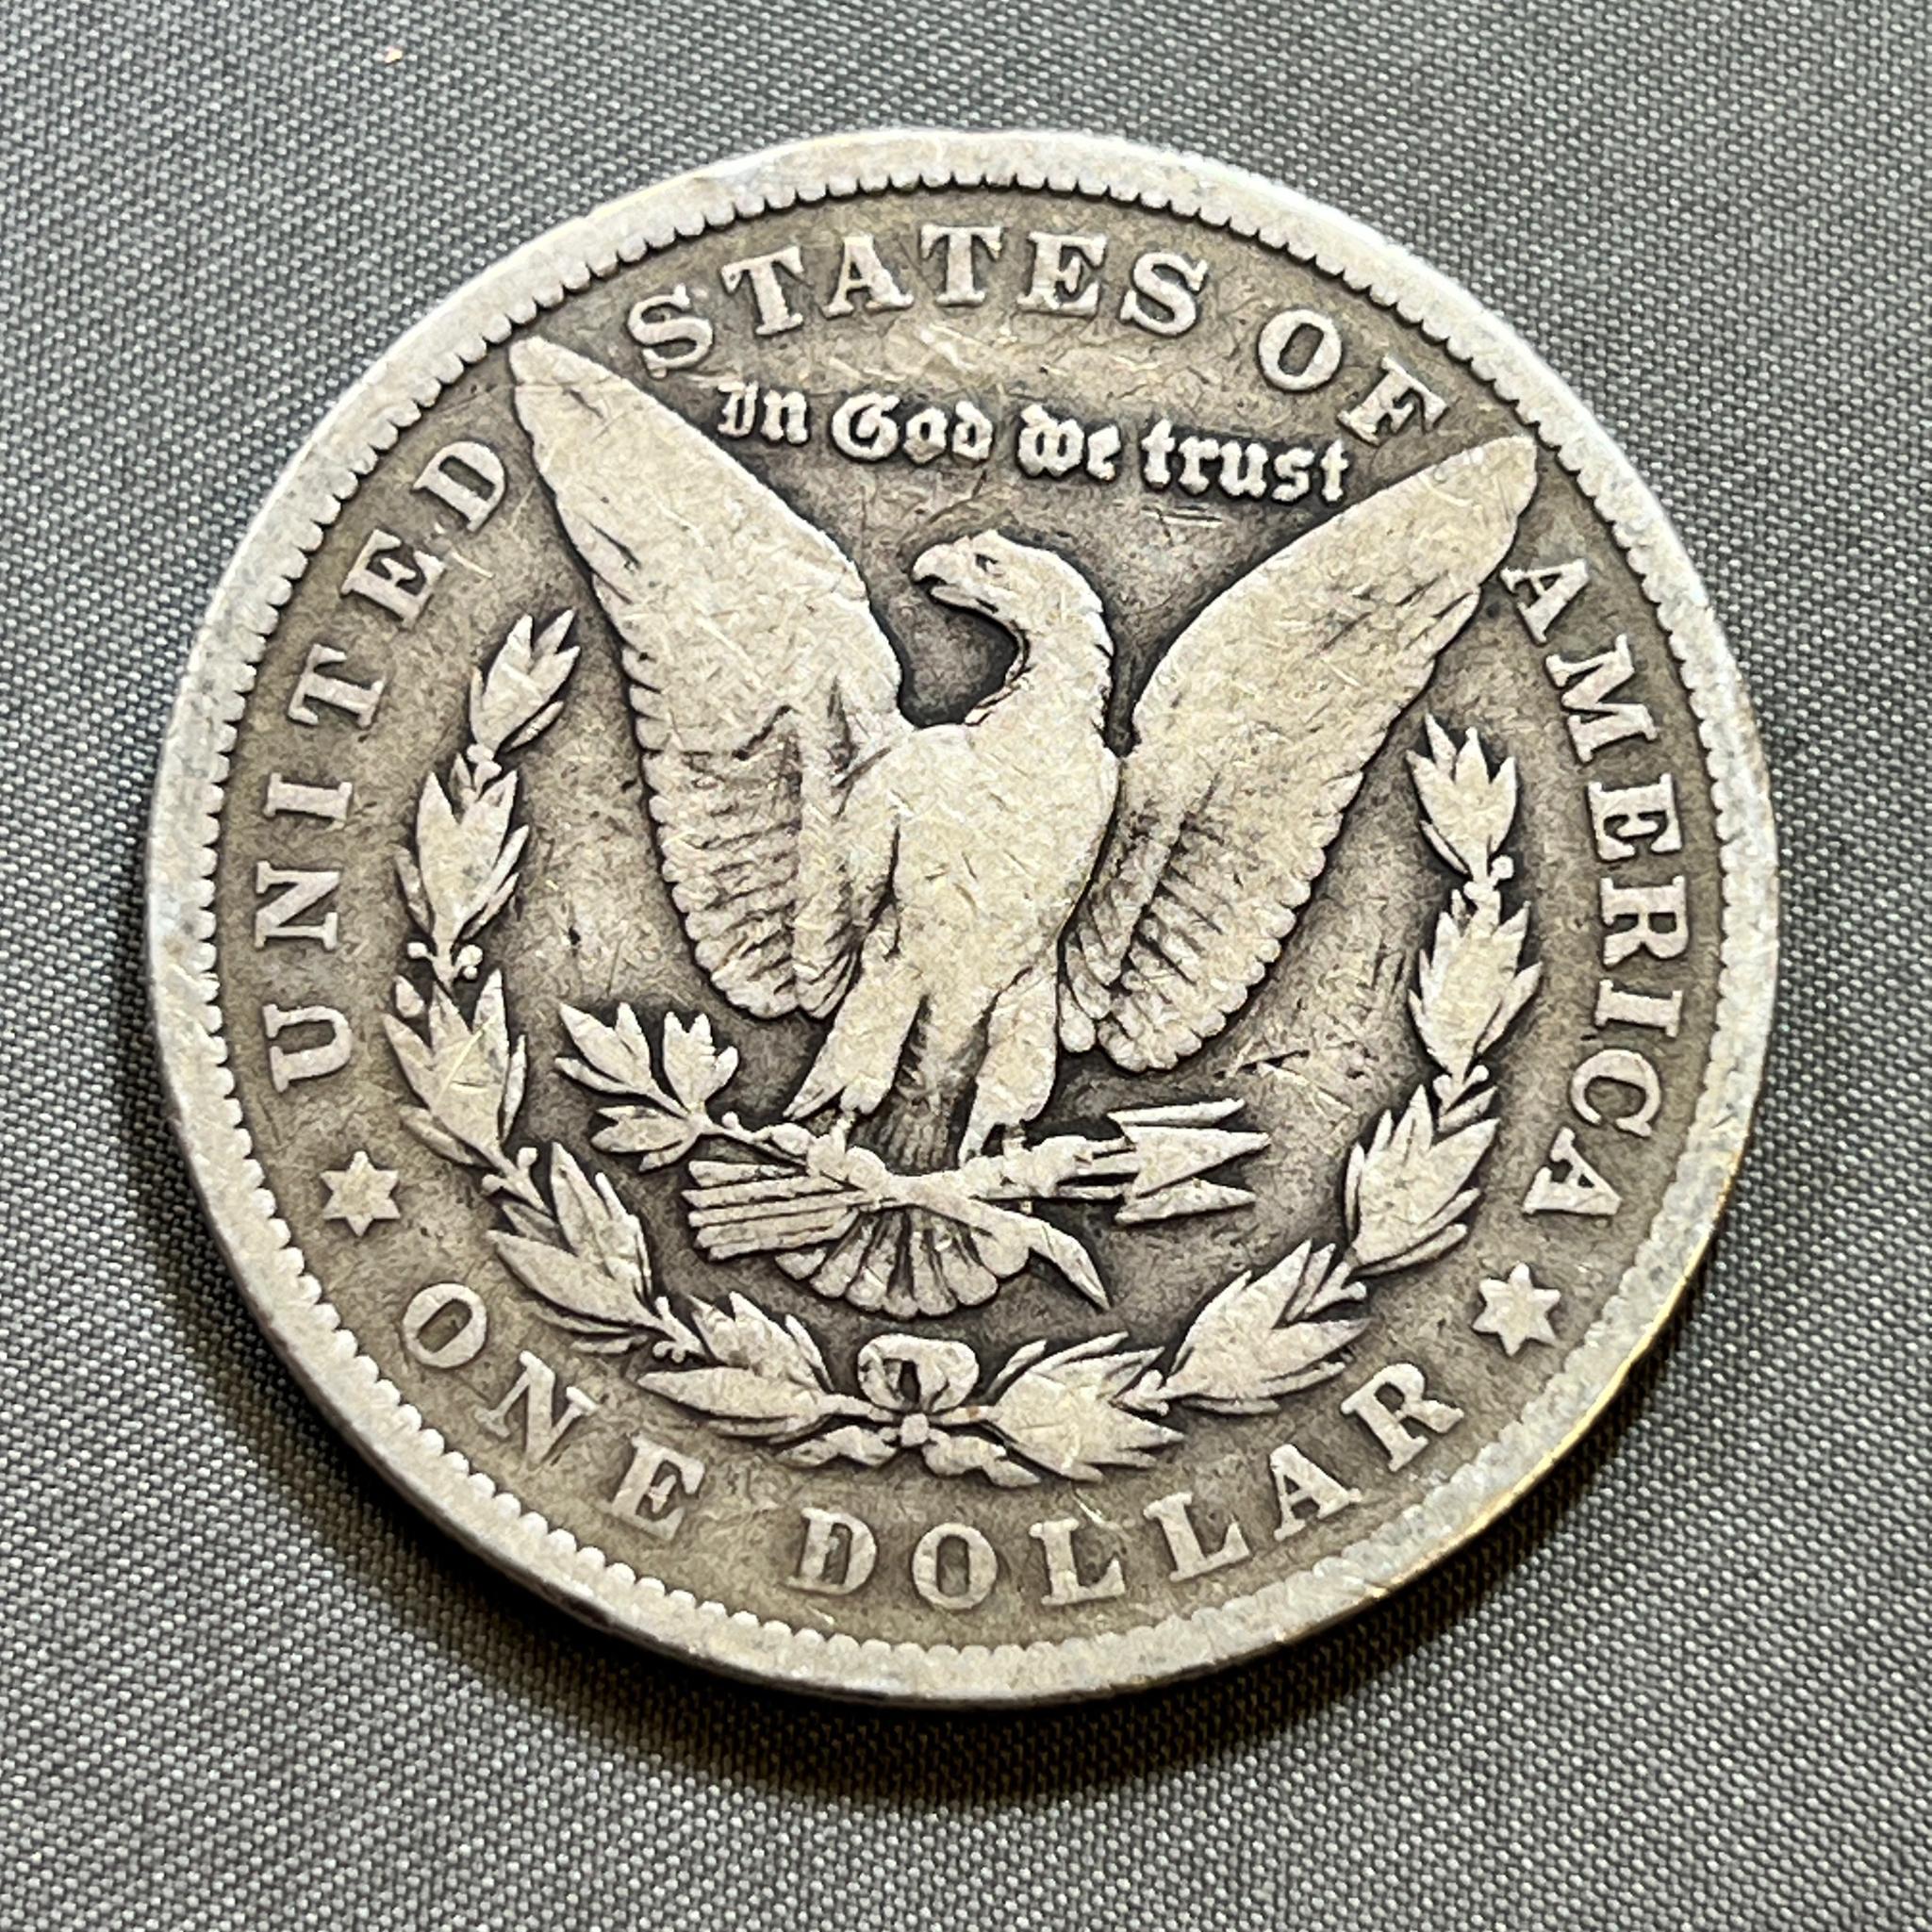 1902 Morgan Silver Dollar, 90% silver